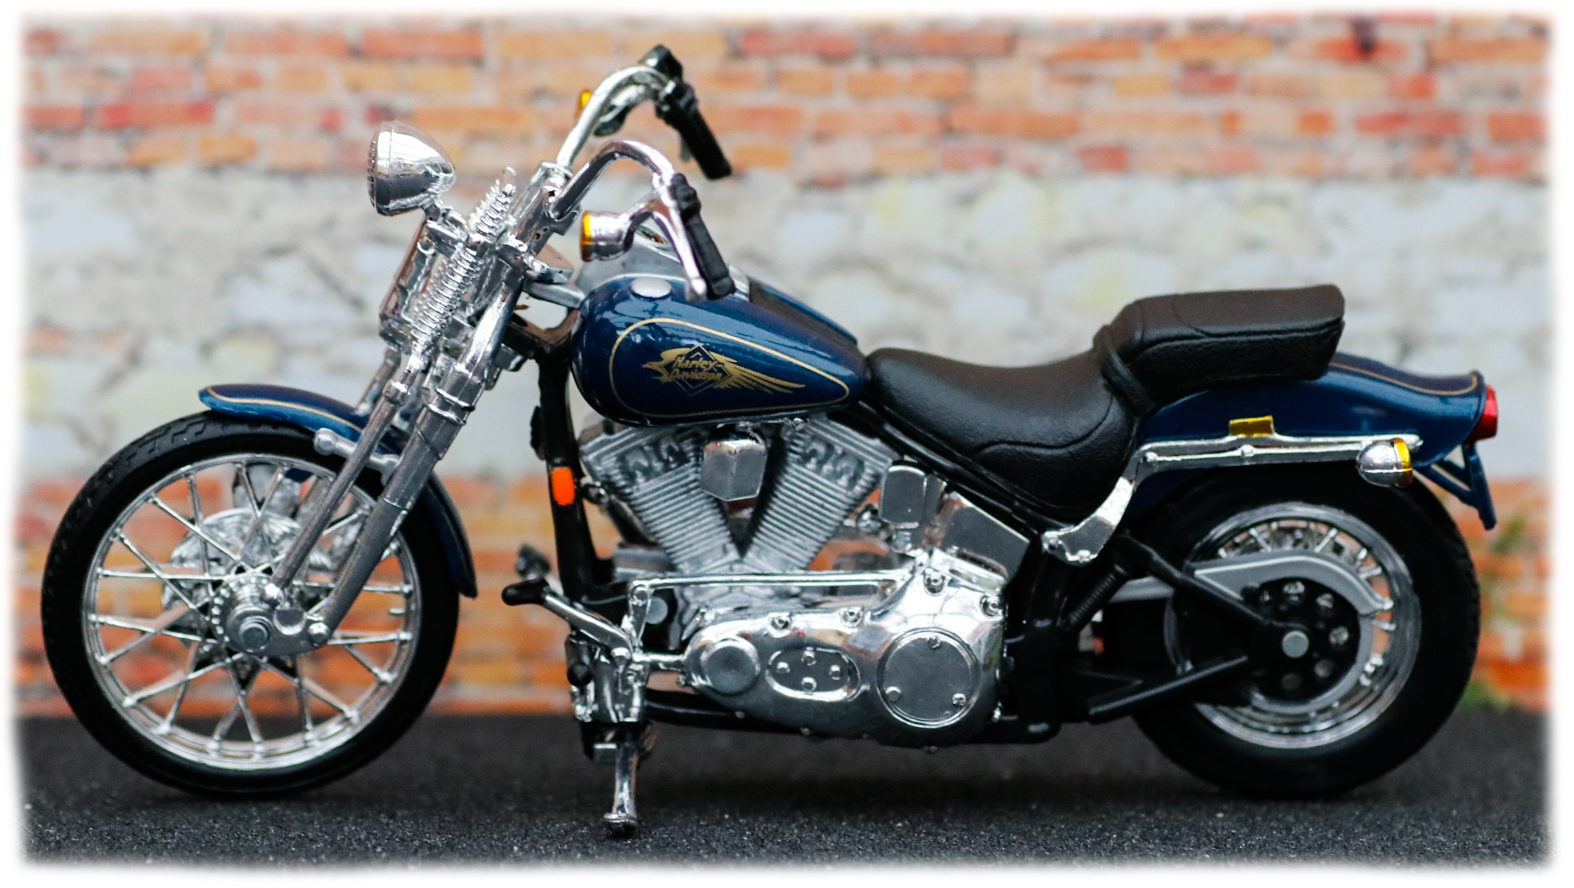 Maisto Harley Davidson FX range of 1:18 scale motorcycles